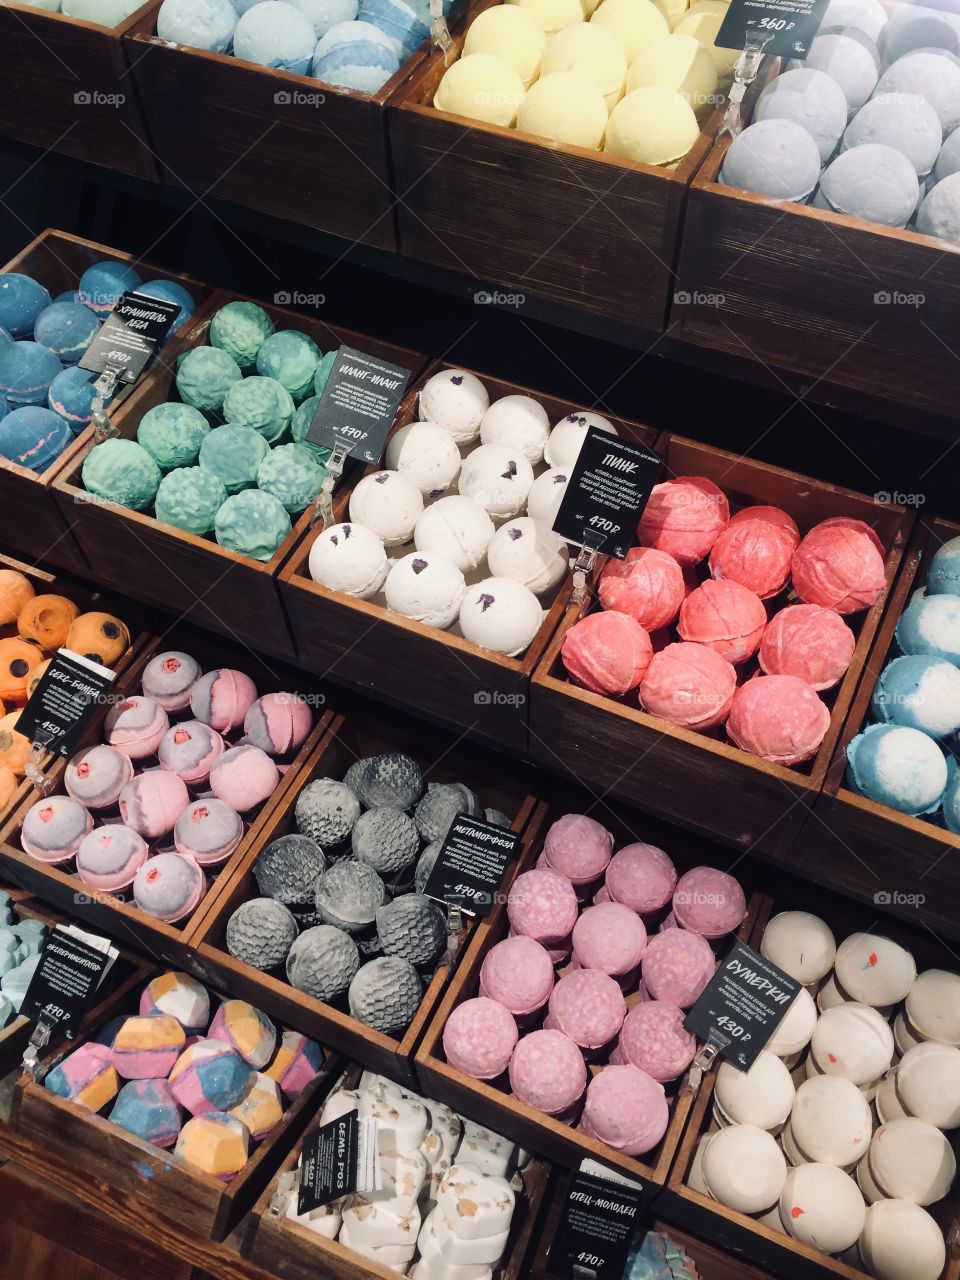 Pretty colorful bath bombs